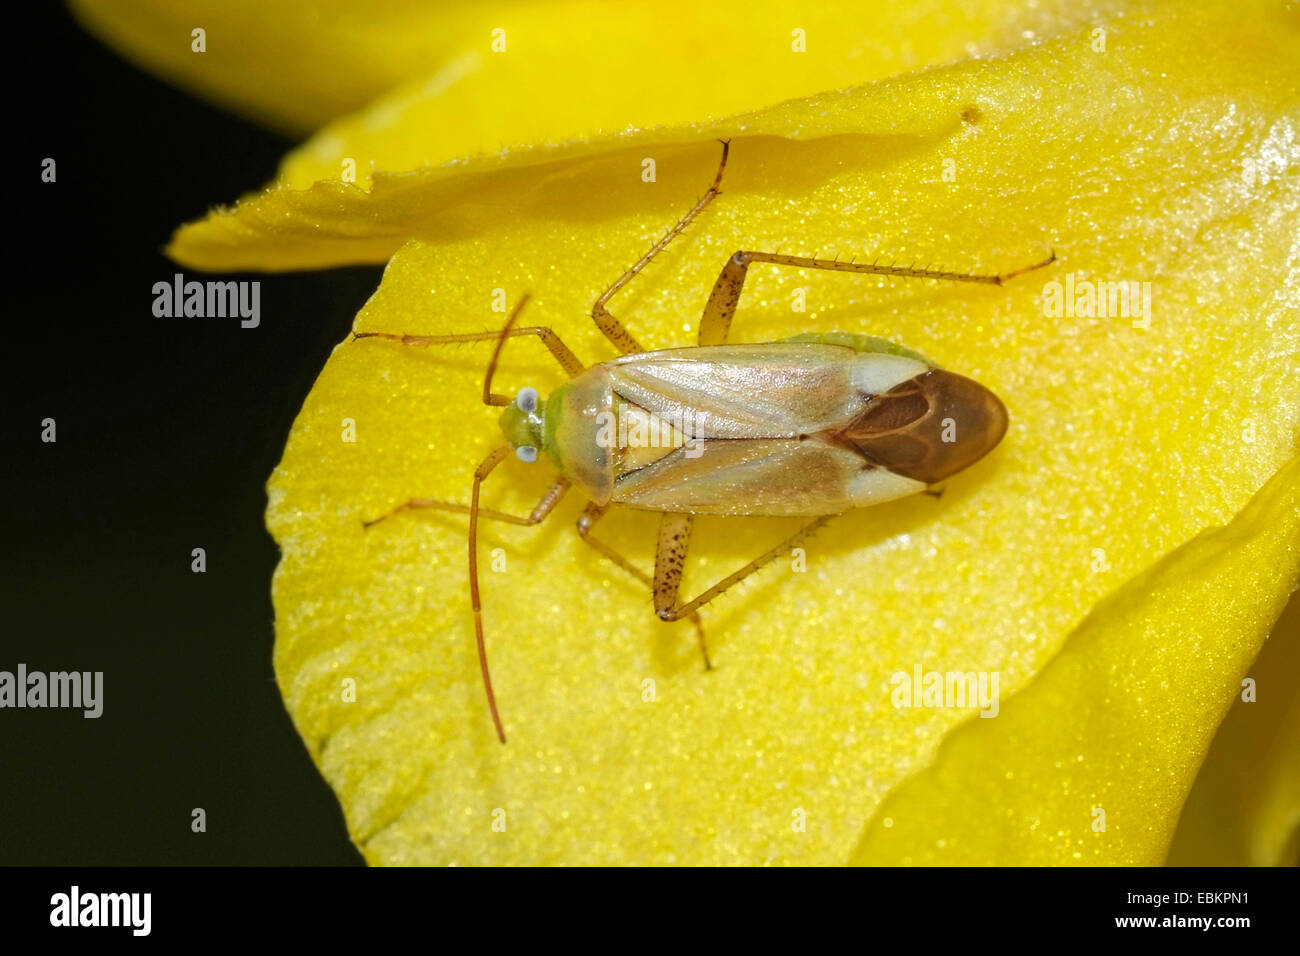 Alfalfa plant bug (Adelphocoris lineolatus), sitting on a yellow flower, Germany Stock Photo